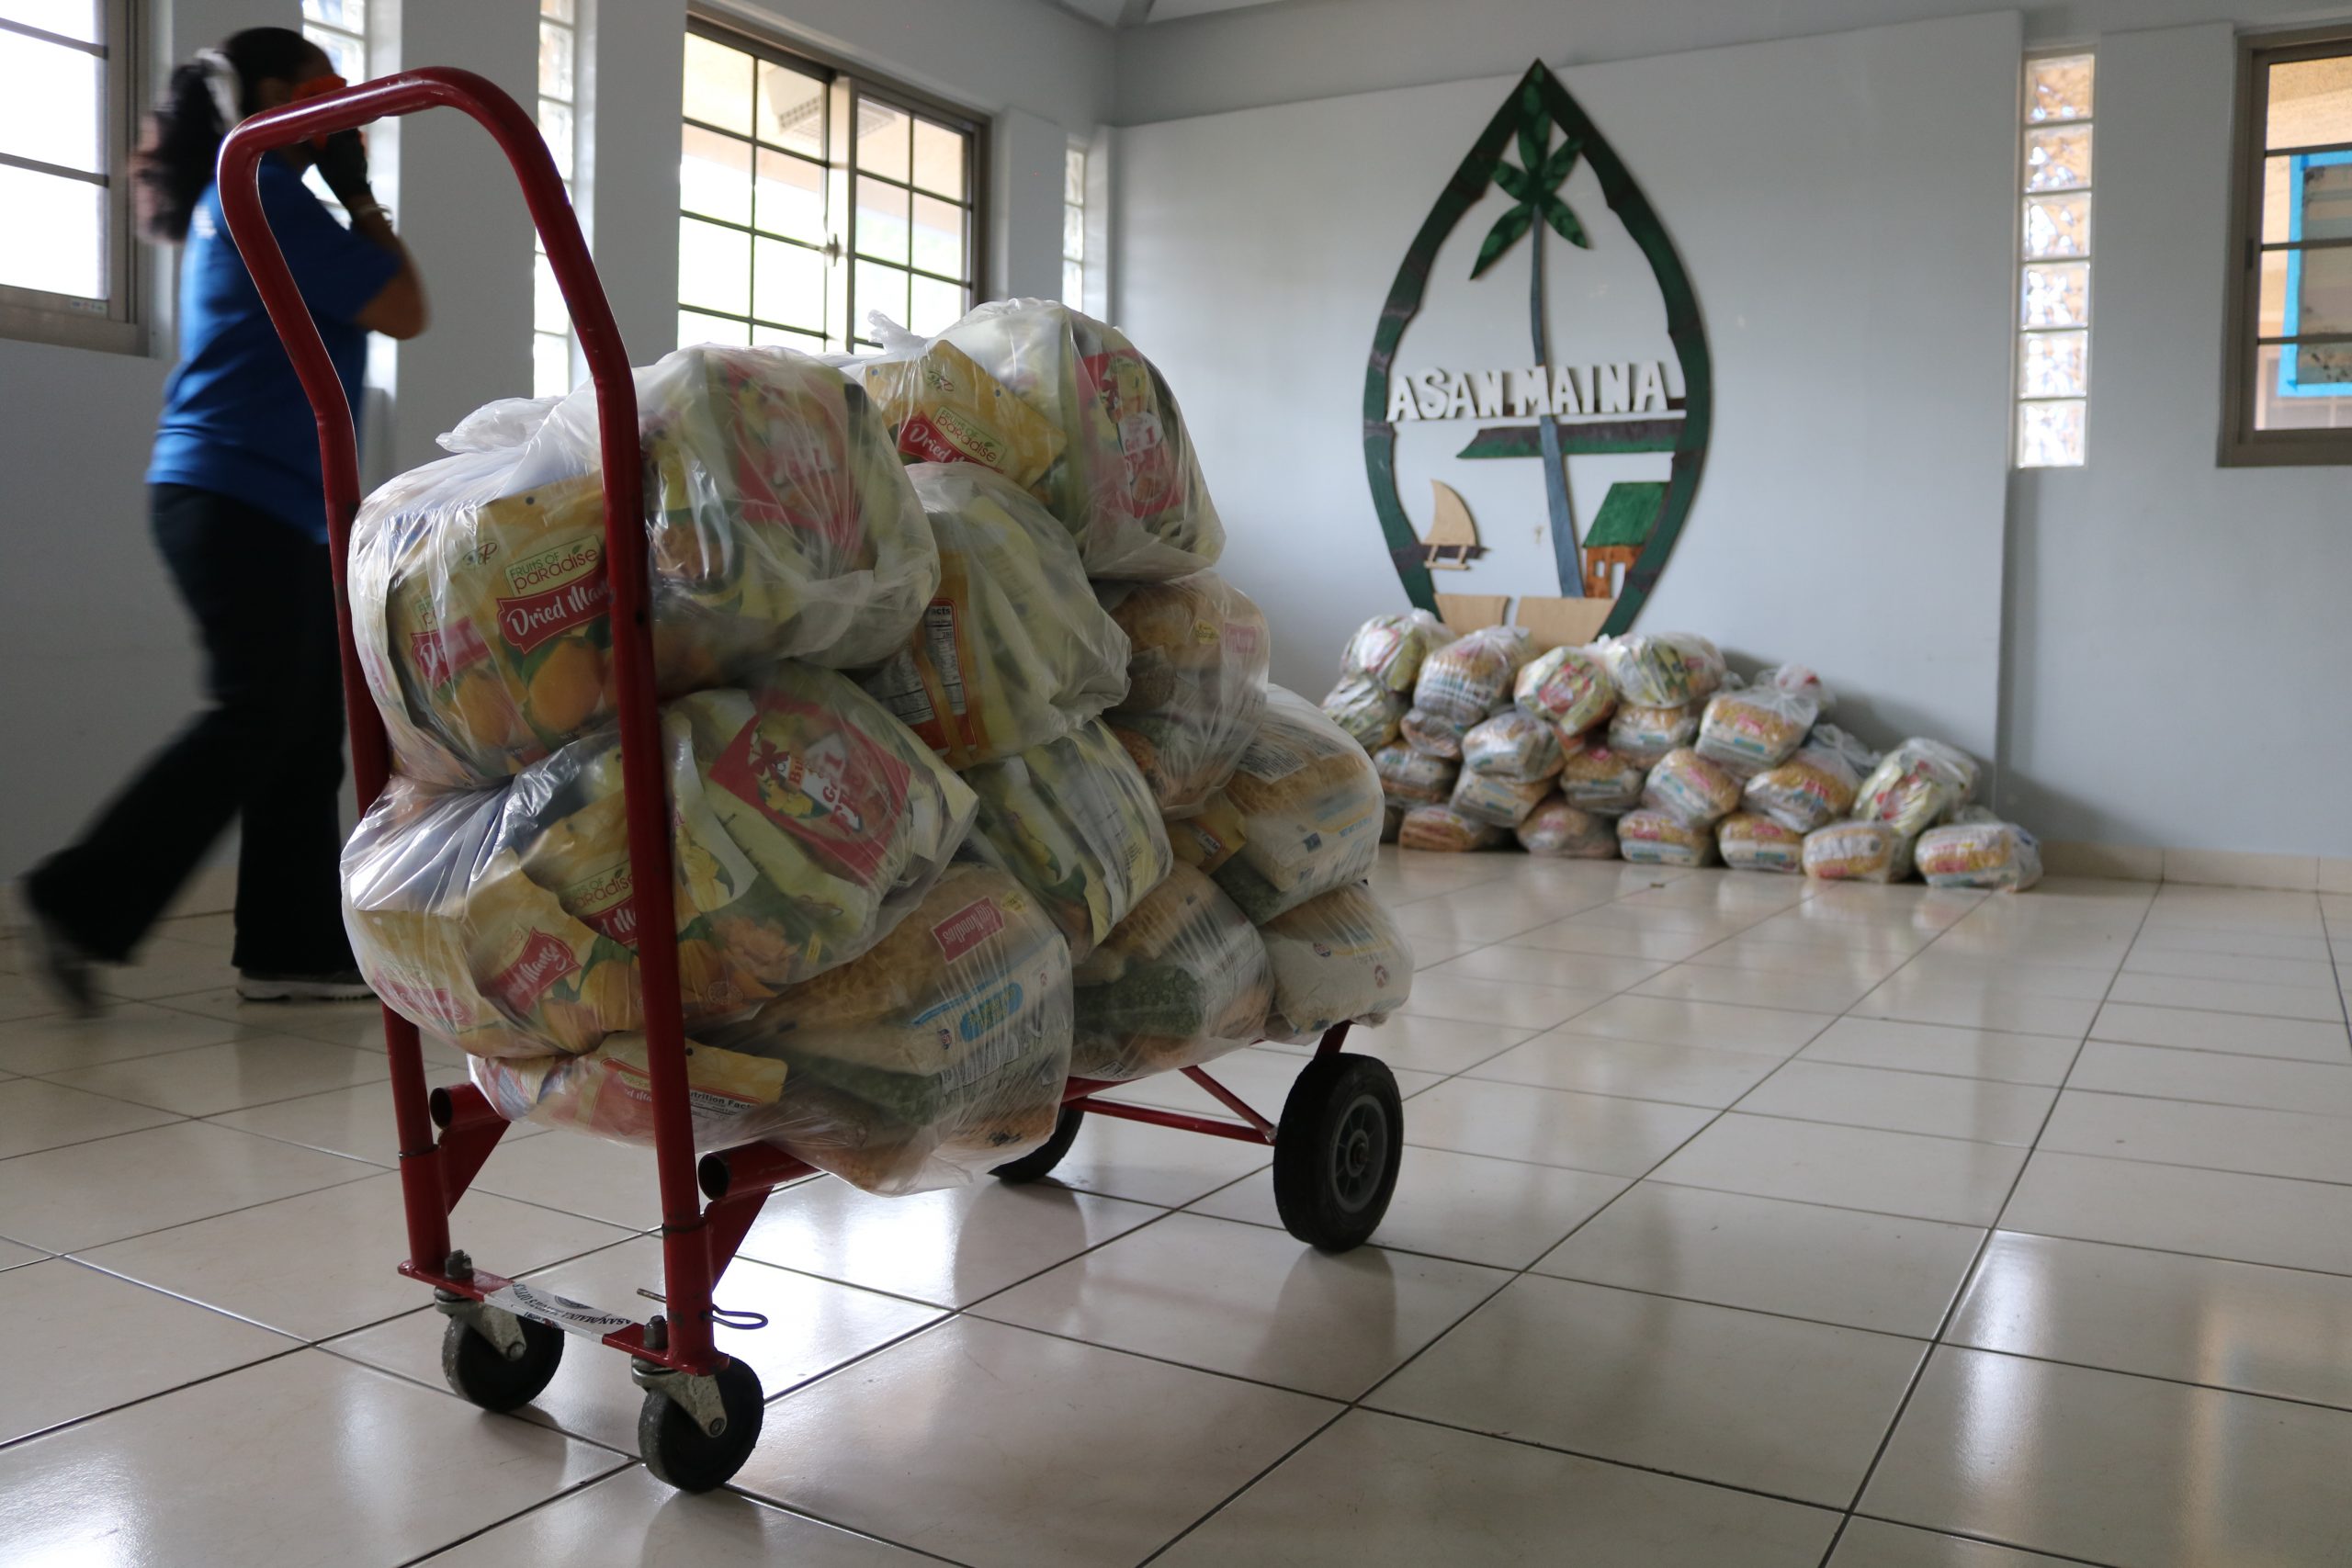 Food Distribution at the Asan-Maina Mayor's Office - The Triton's Call